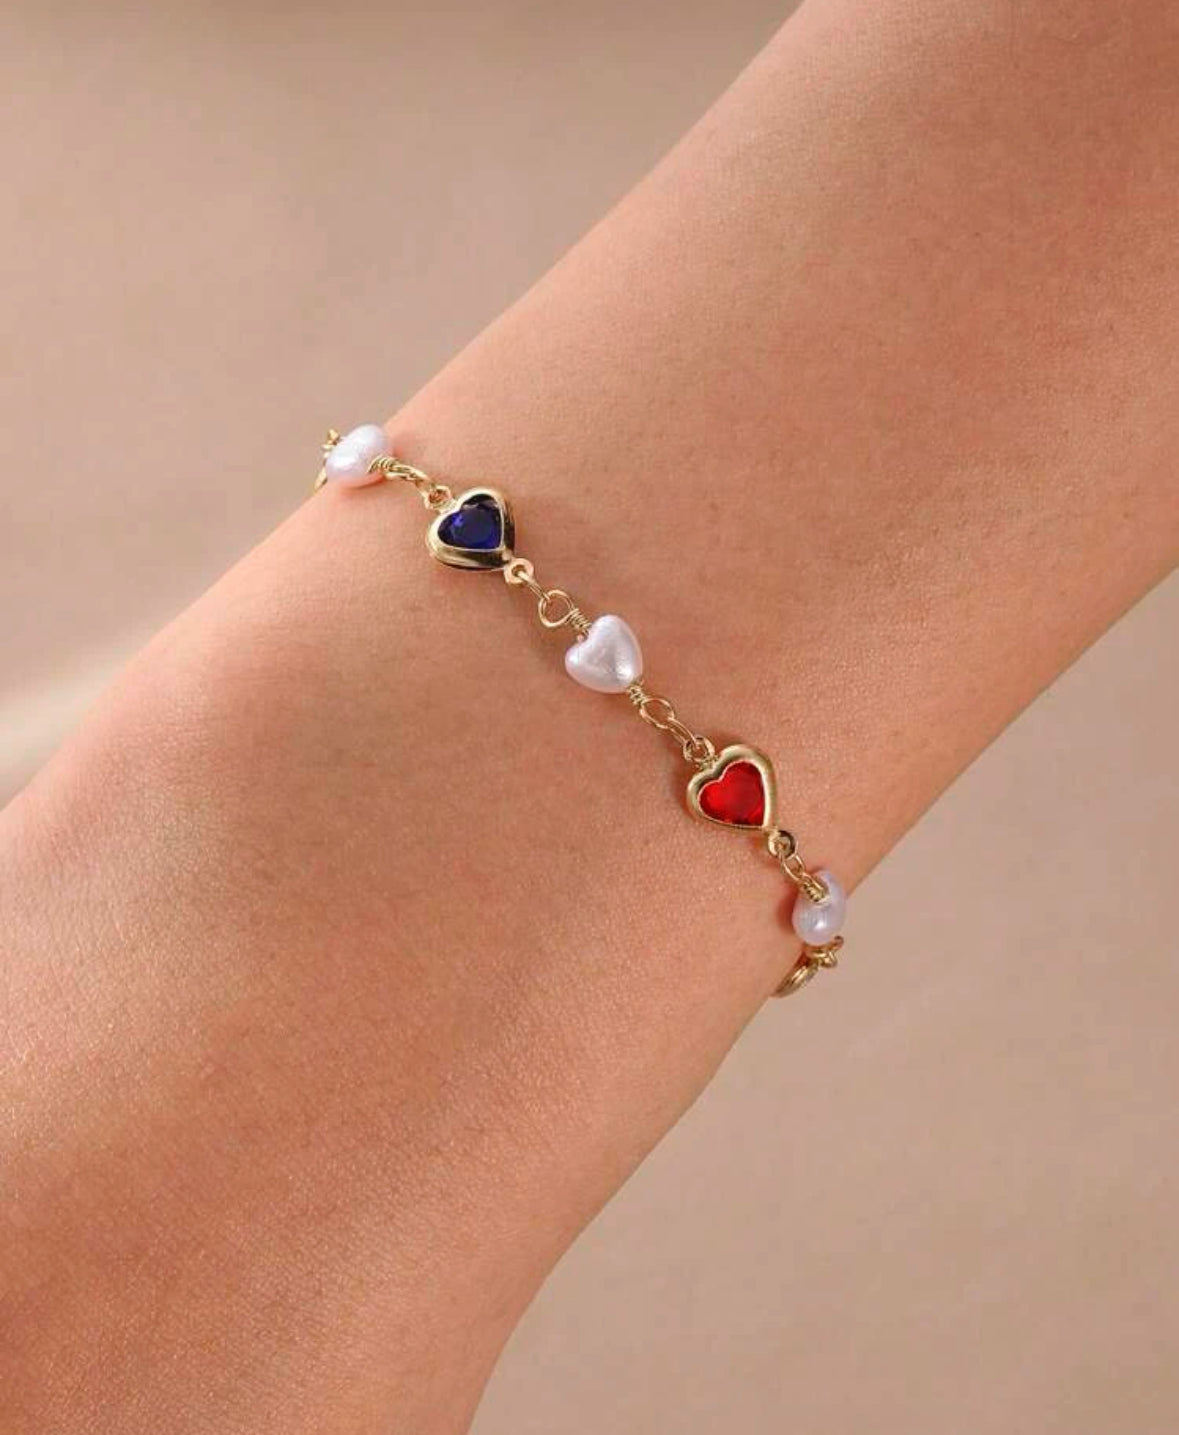 Colourful pearl bracelet, freshwater pearl beaded heart charm bracelet.